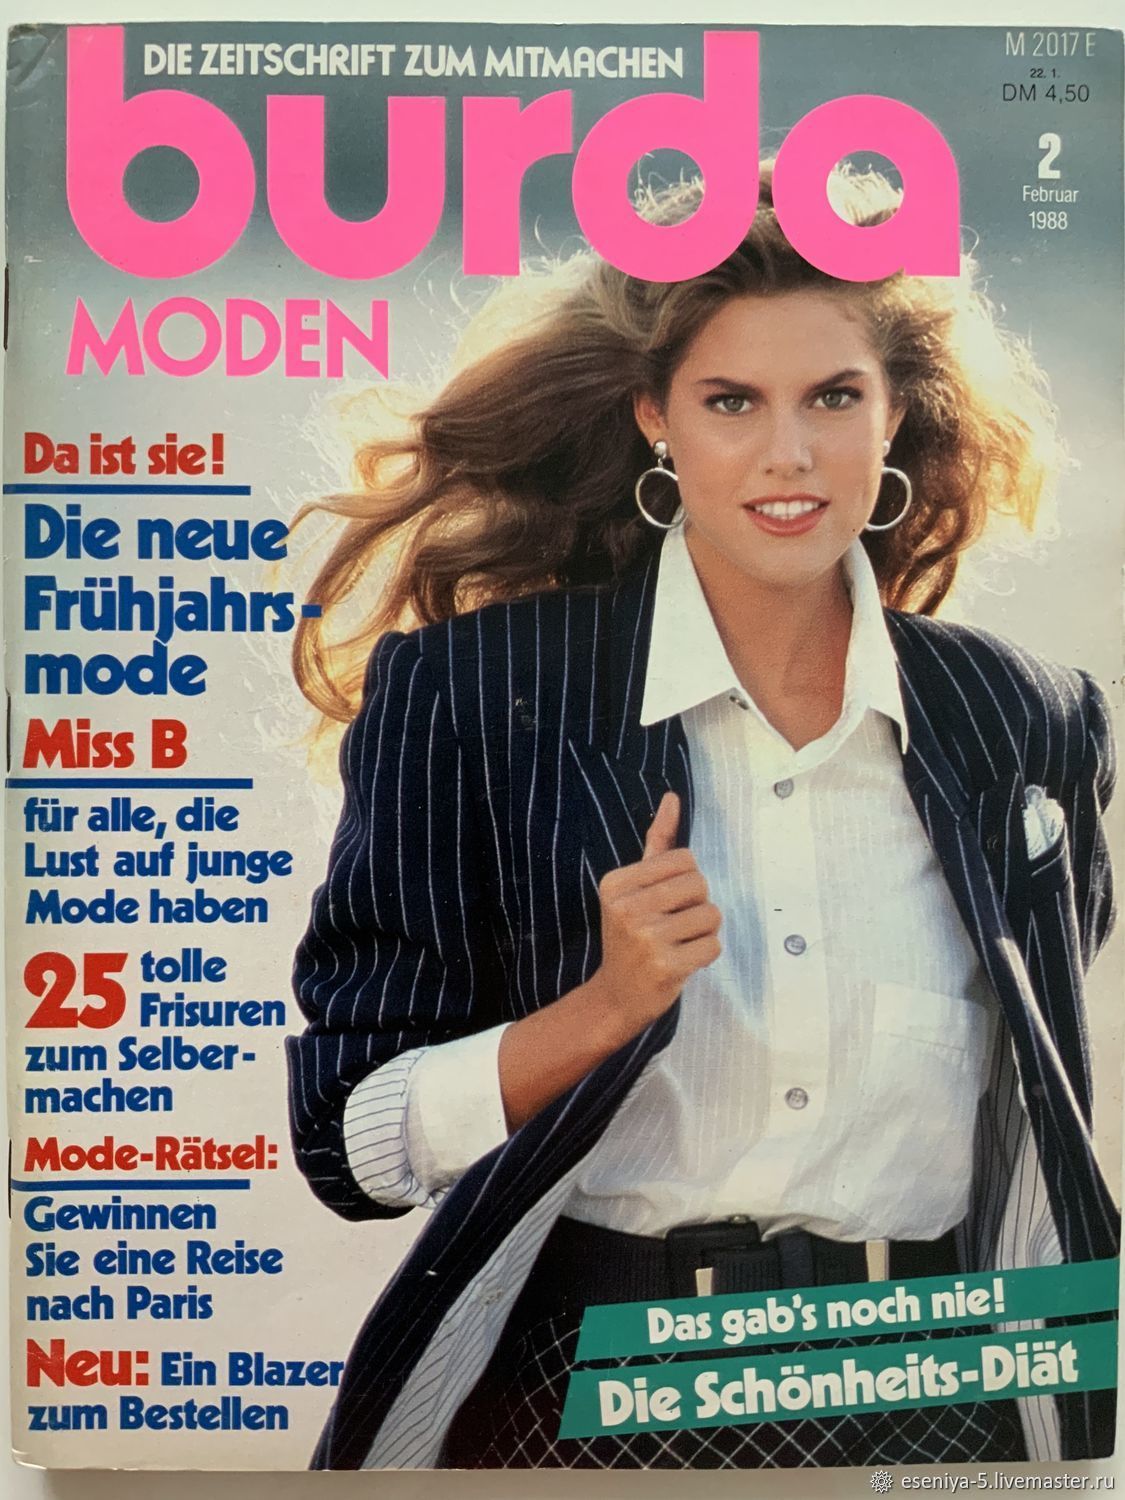 Burda Moden Magazine 1988 2 (February) incomplete, Magazines, Moscow,  Фото №1